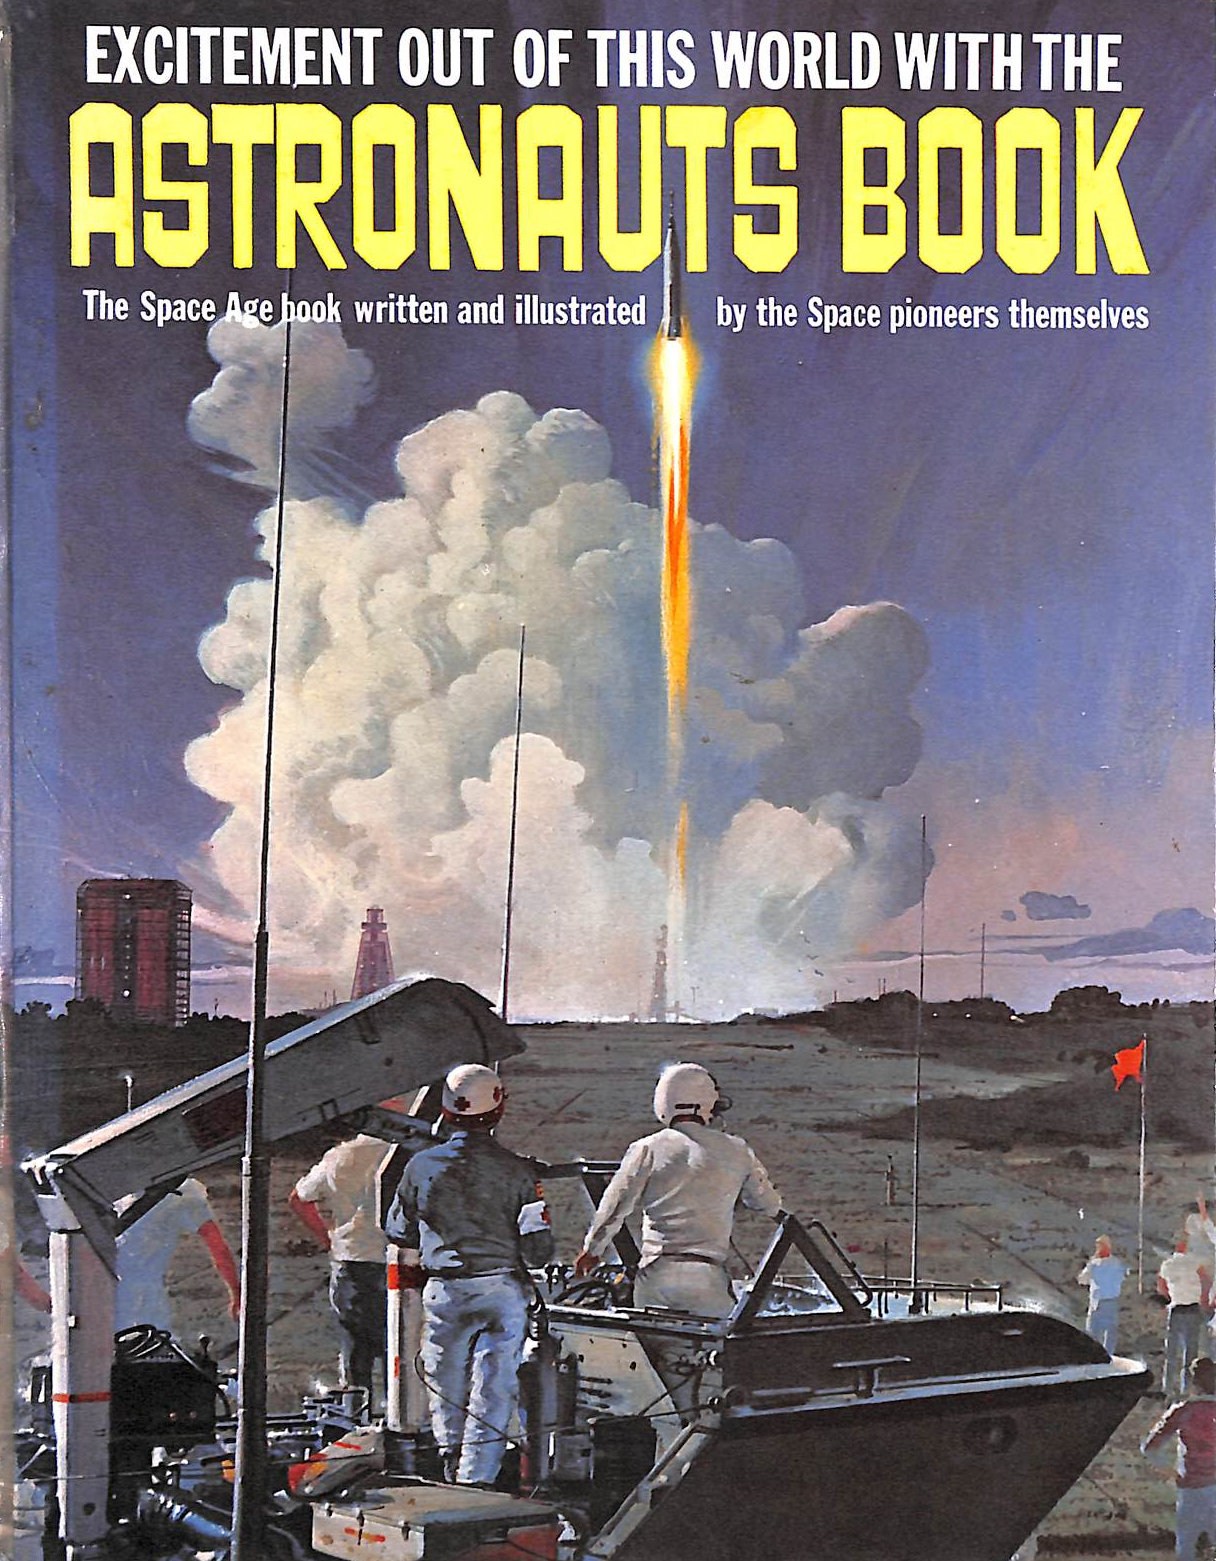 NO AUTHOR. - The Astronauts Book.